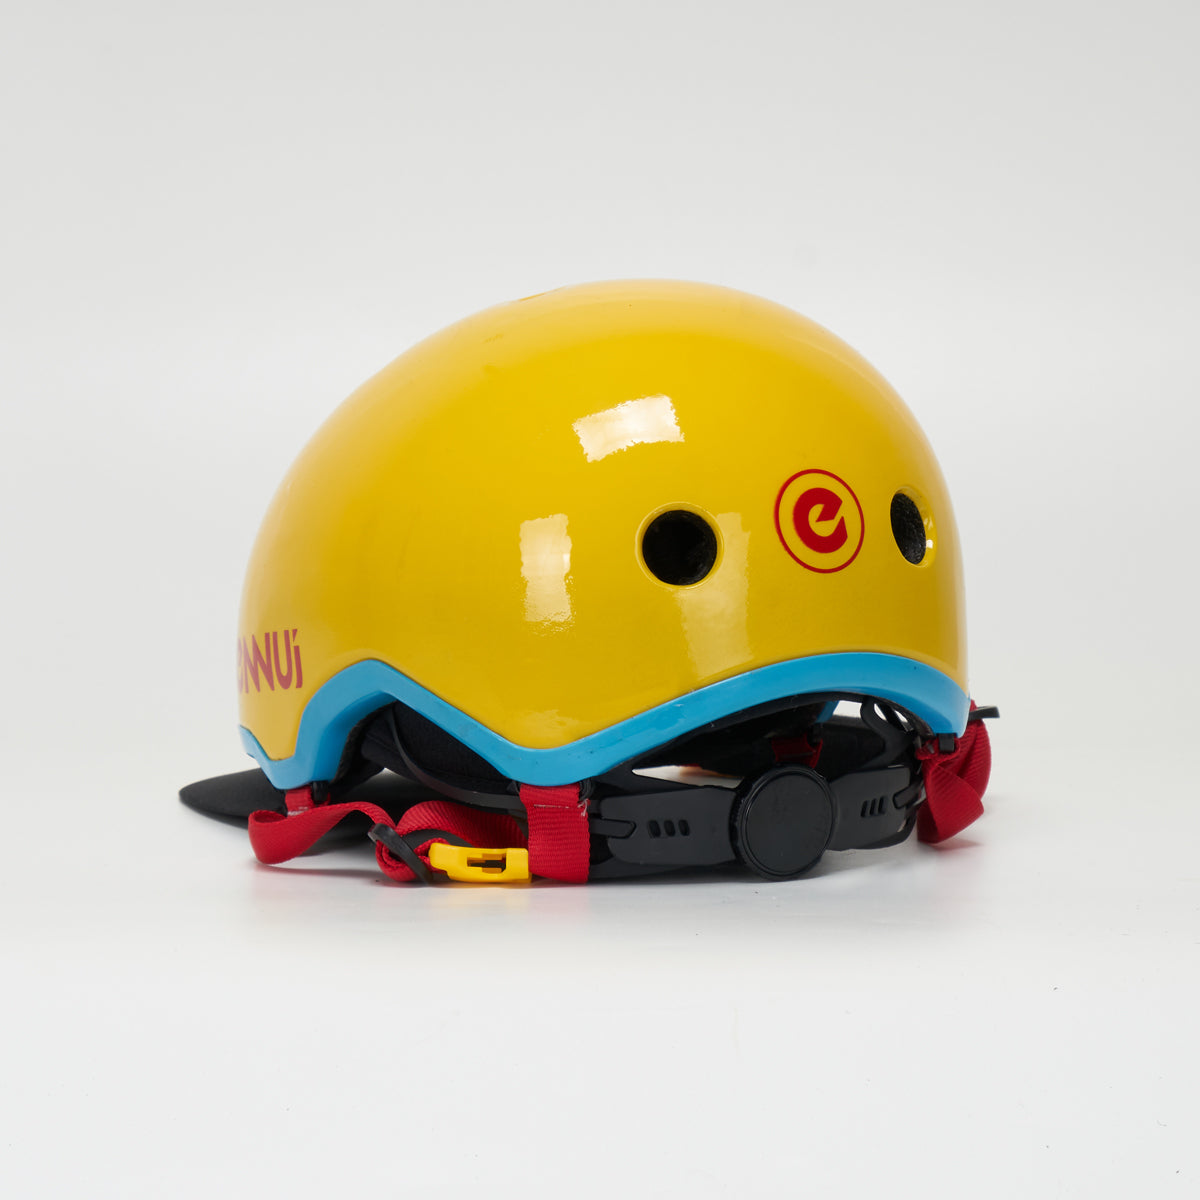 Ennui Elite Helmet - Yellow